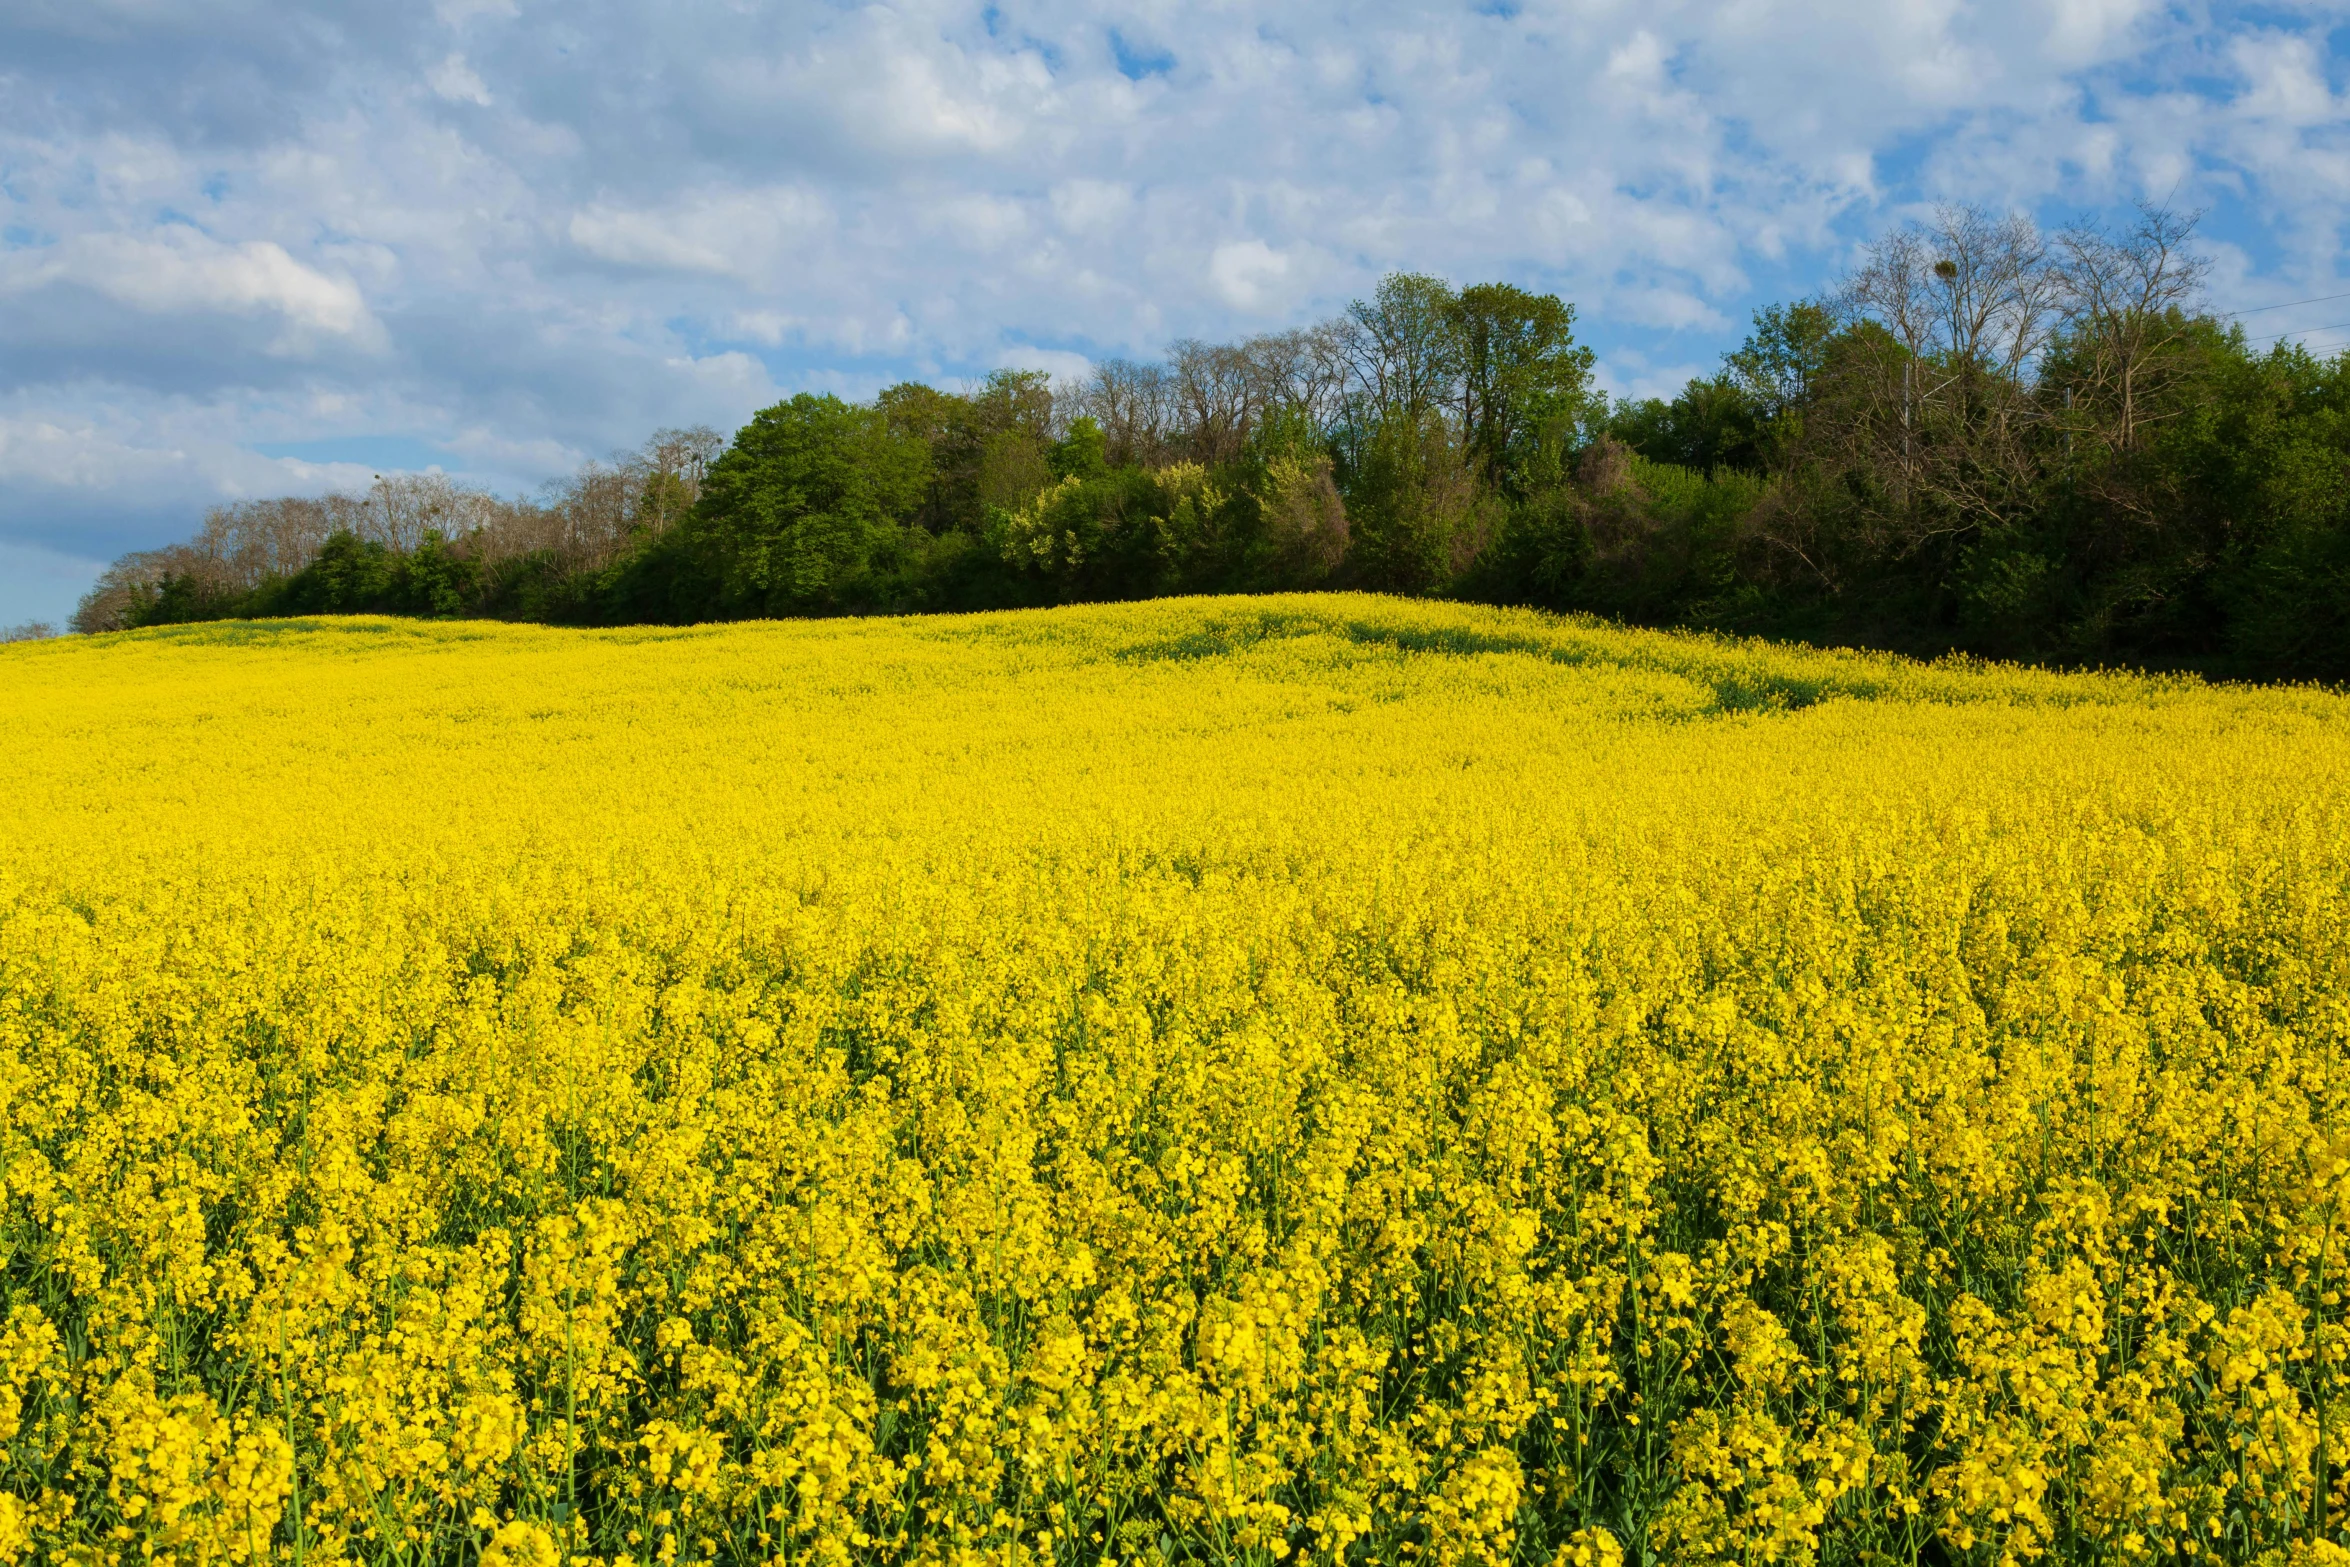 an open field with yellow flowers growing in it